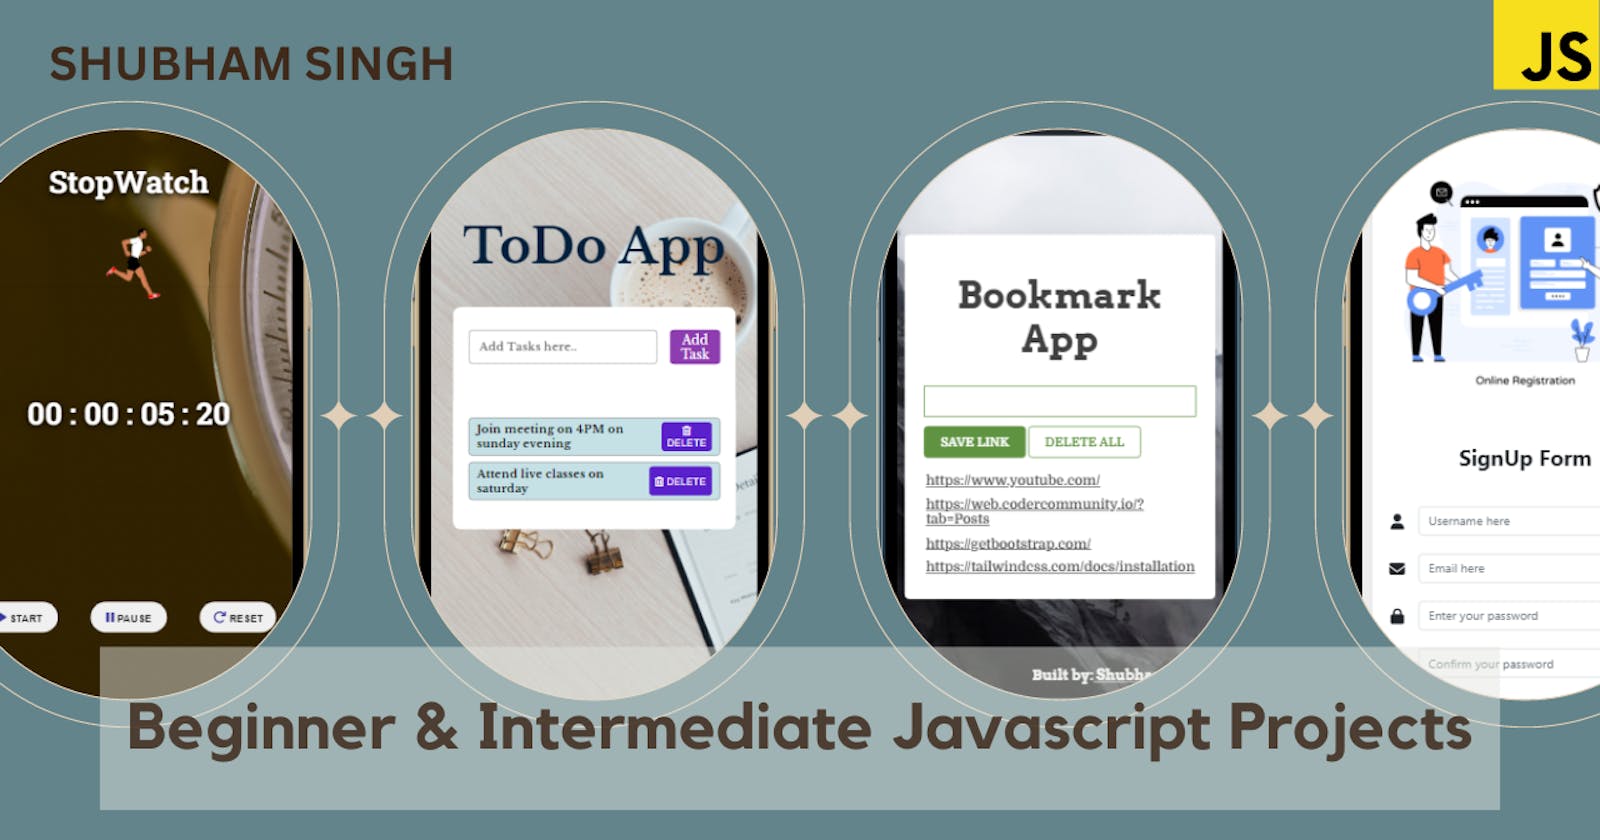 Beginner& Intermediate Friendly JavaScripts 
                                                         Projects